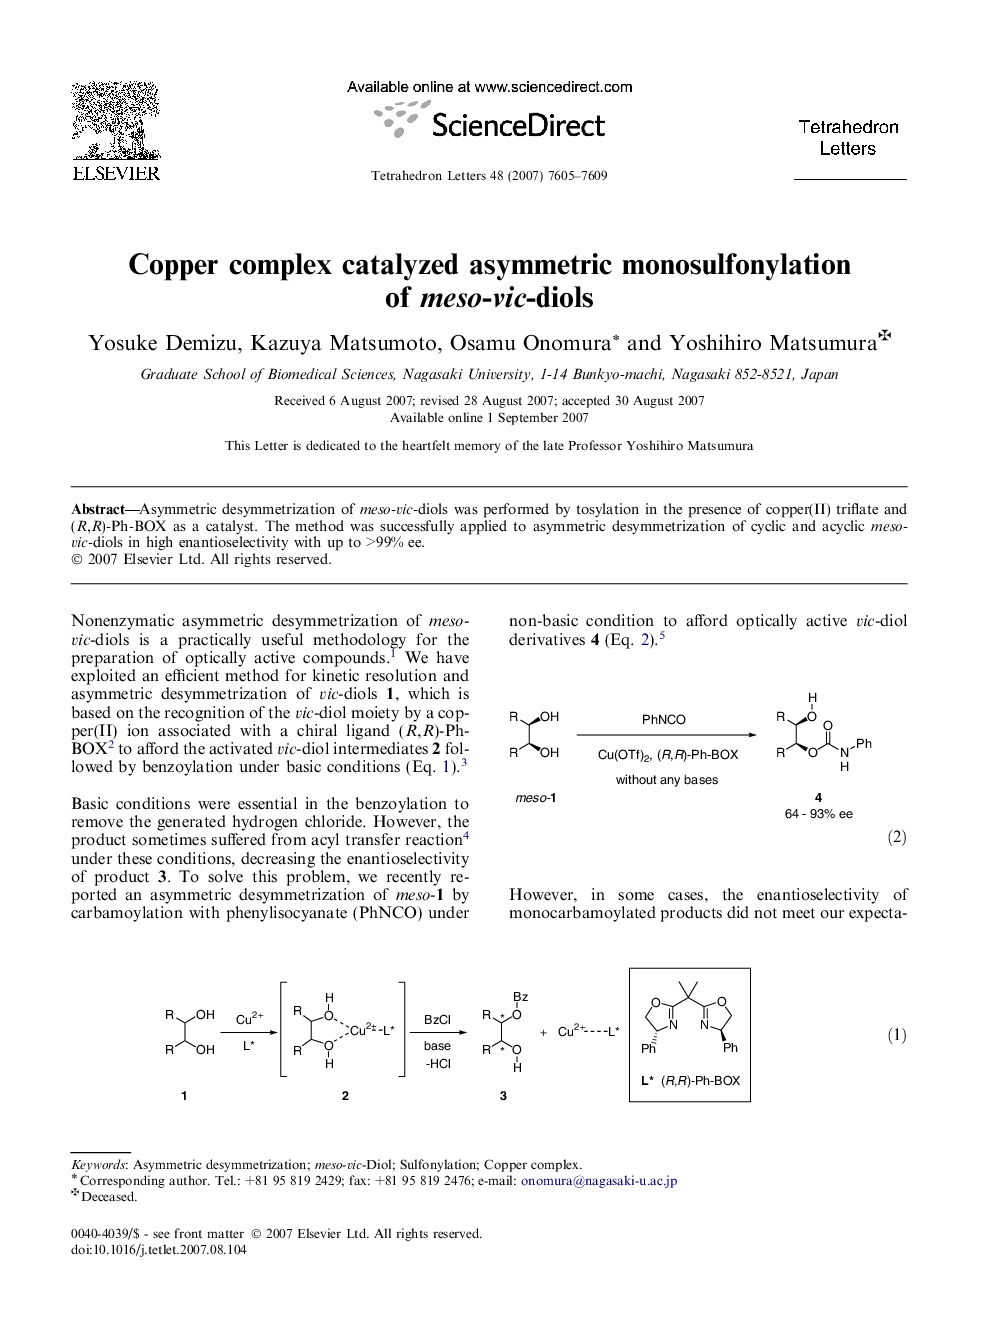 Copper complex catalyzed asymmetric monosulfonylation of meso-vic-diols